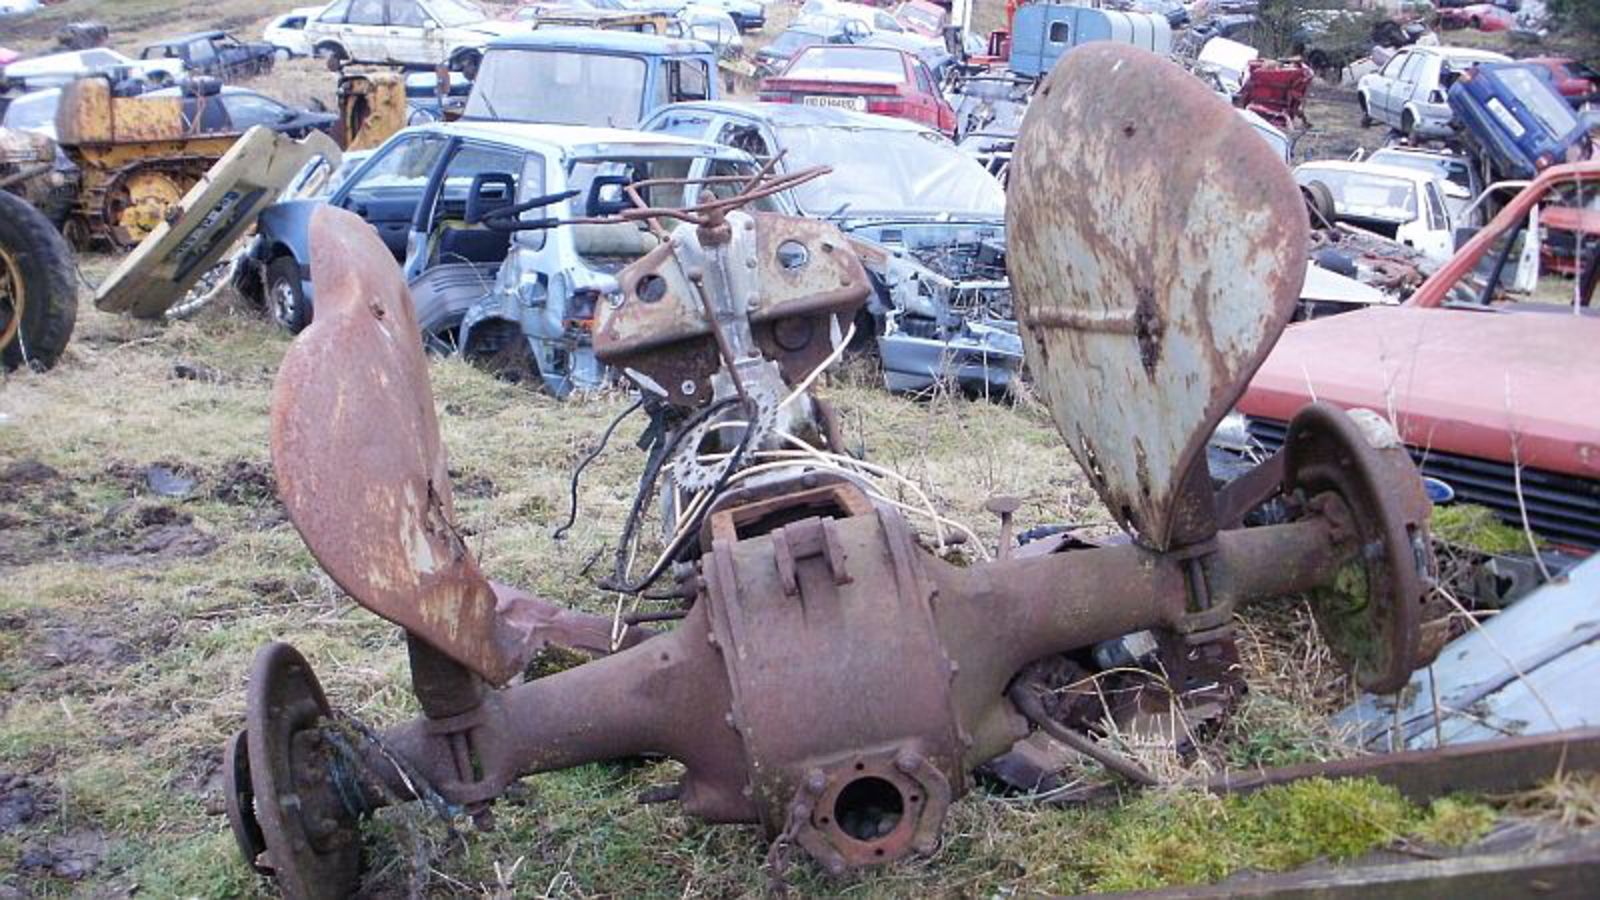 Body of Ferguson T20 tractor | Flickr - Photo Sharing!